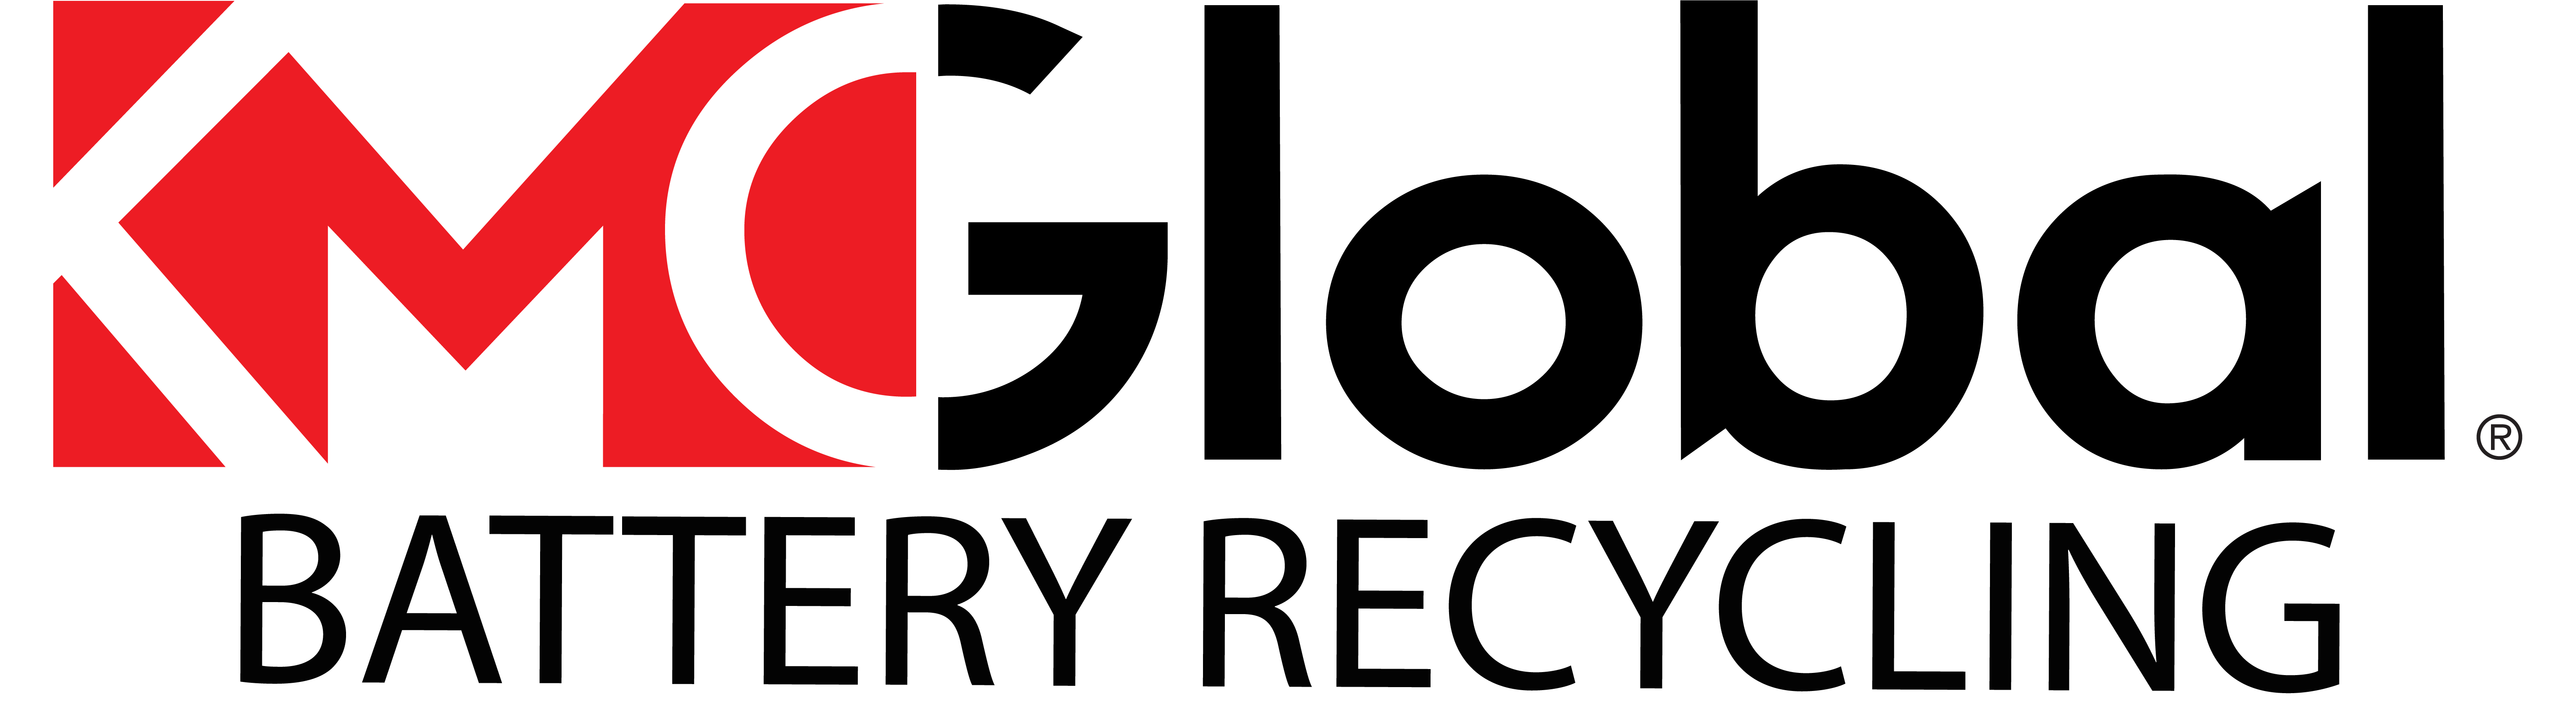 KMC Global Battery Recycling Logo